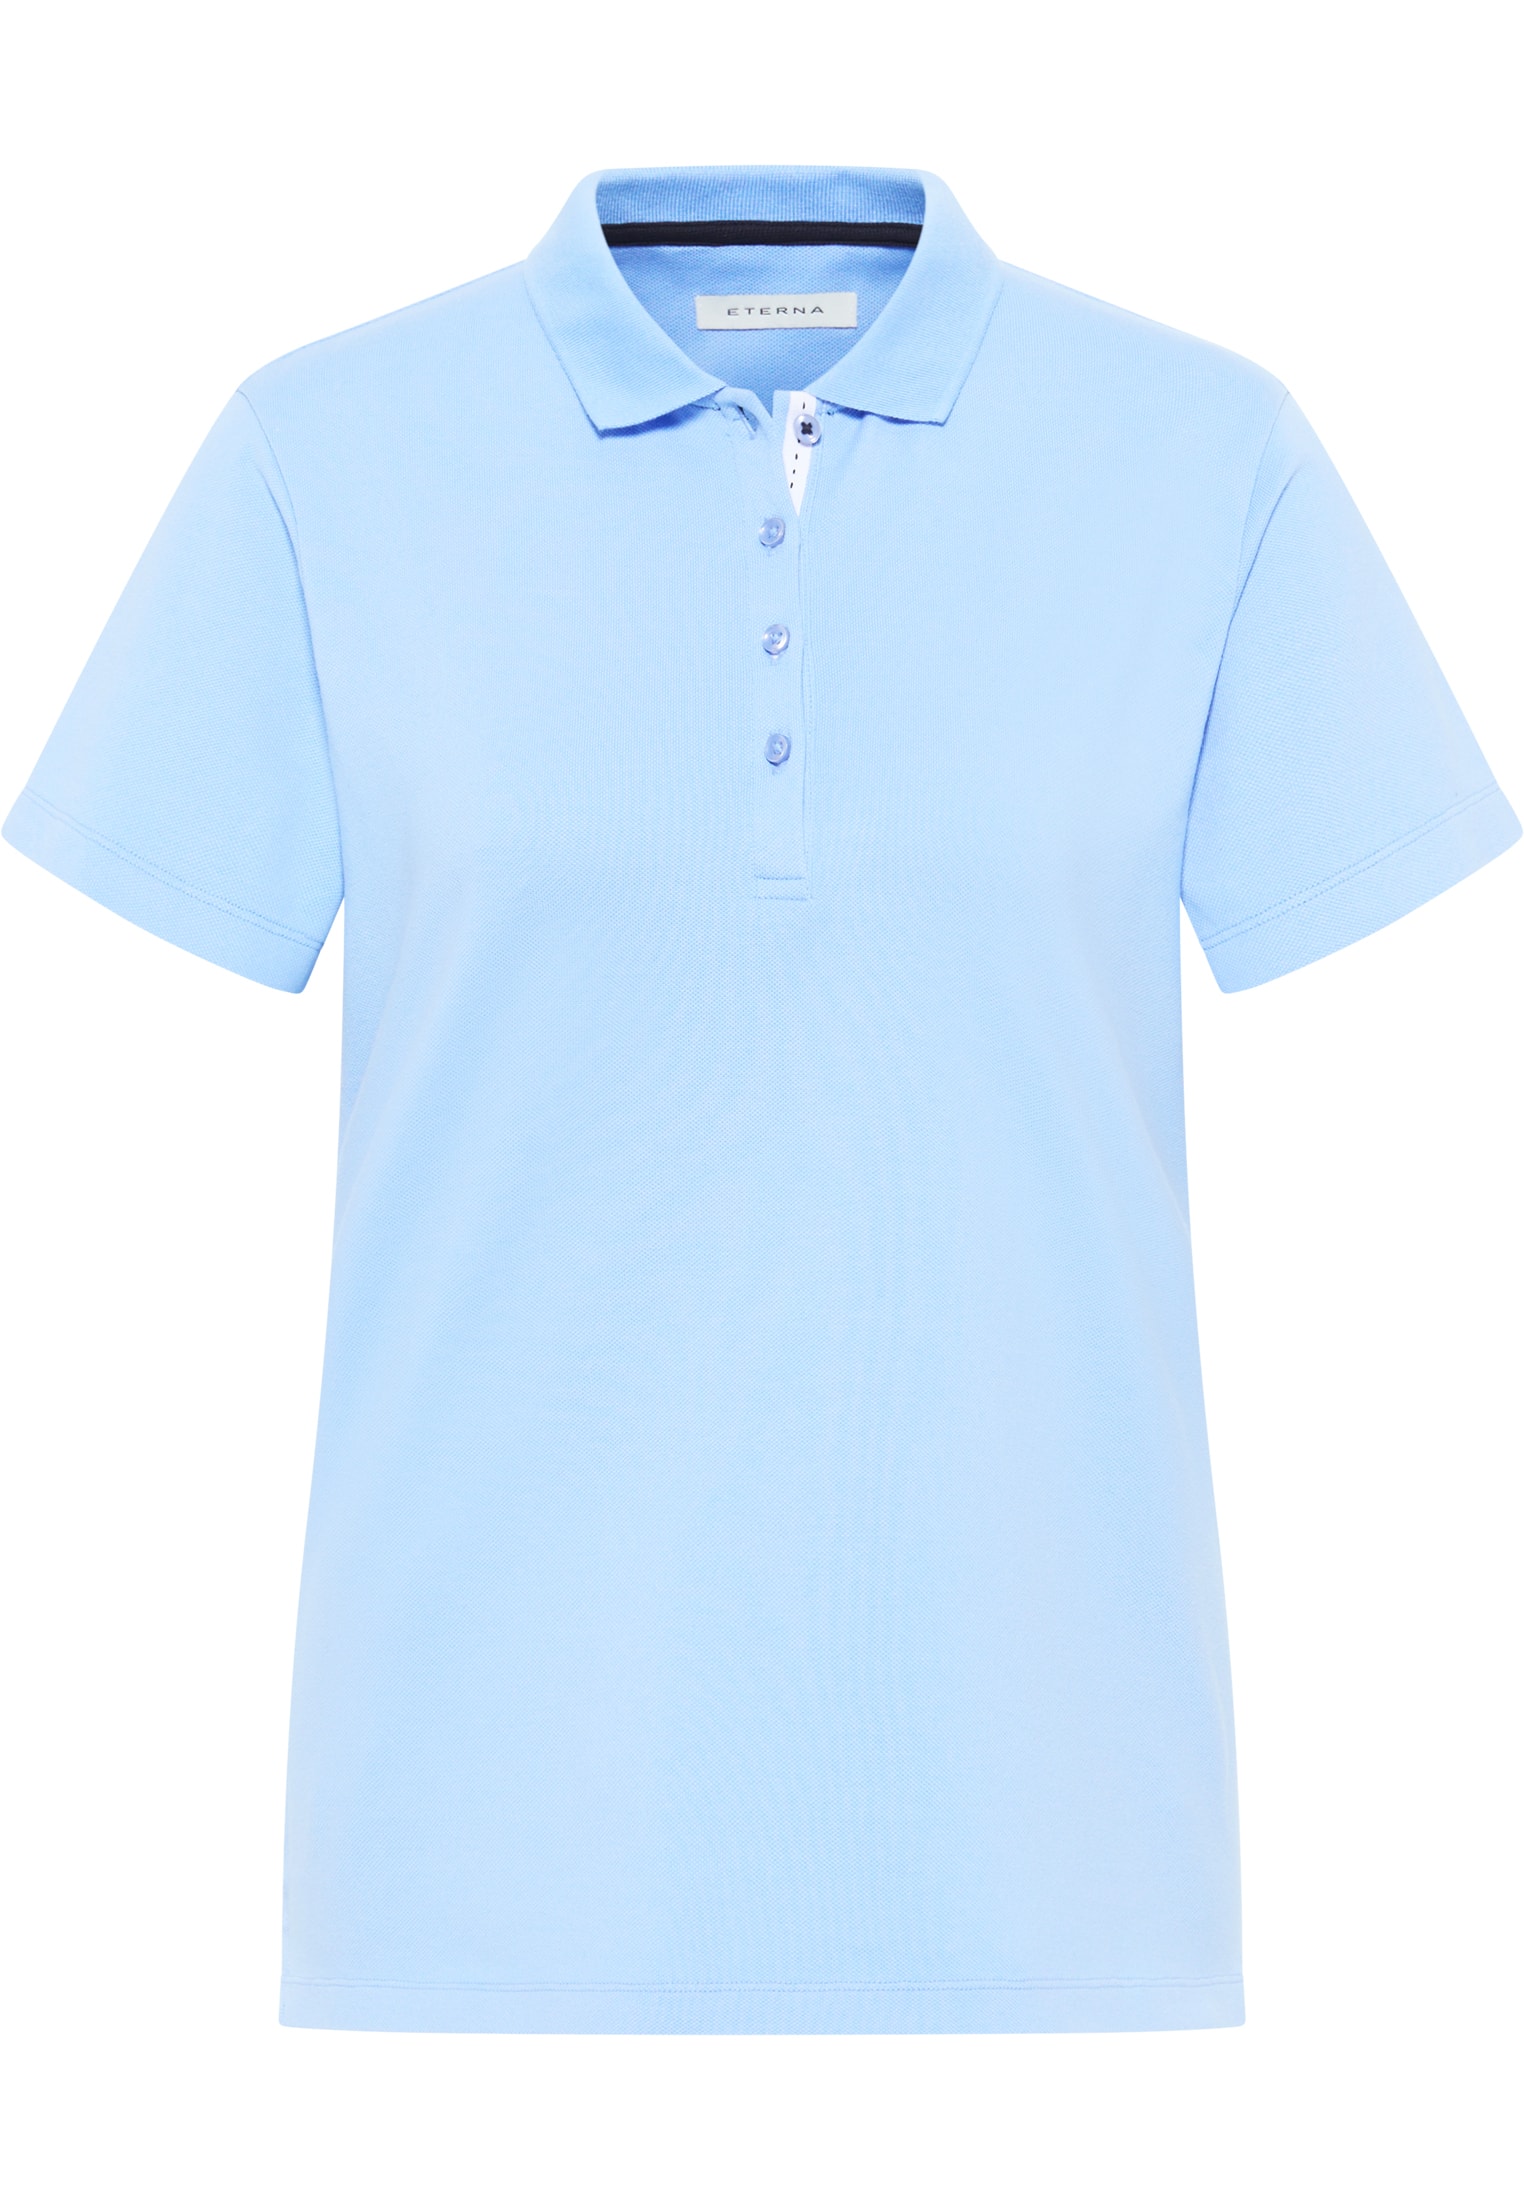 Polo shirt in light blue plain